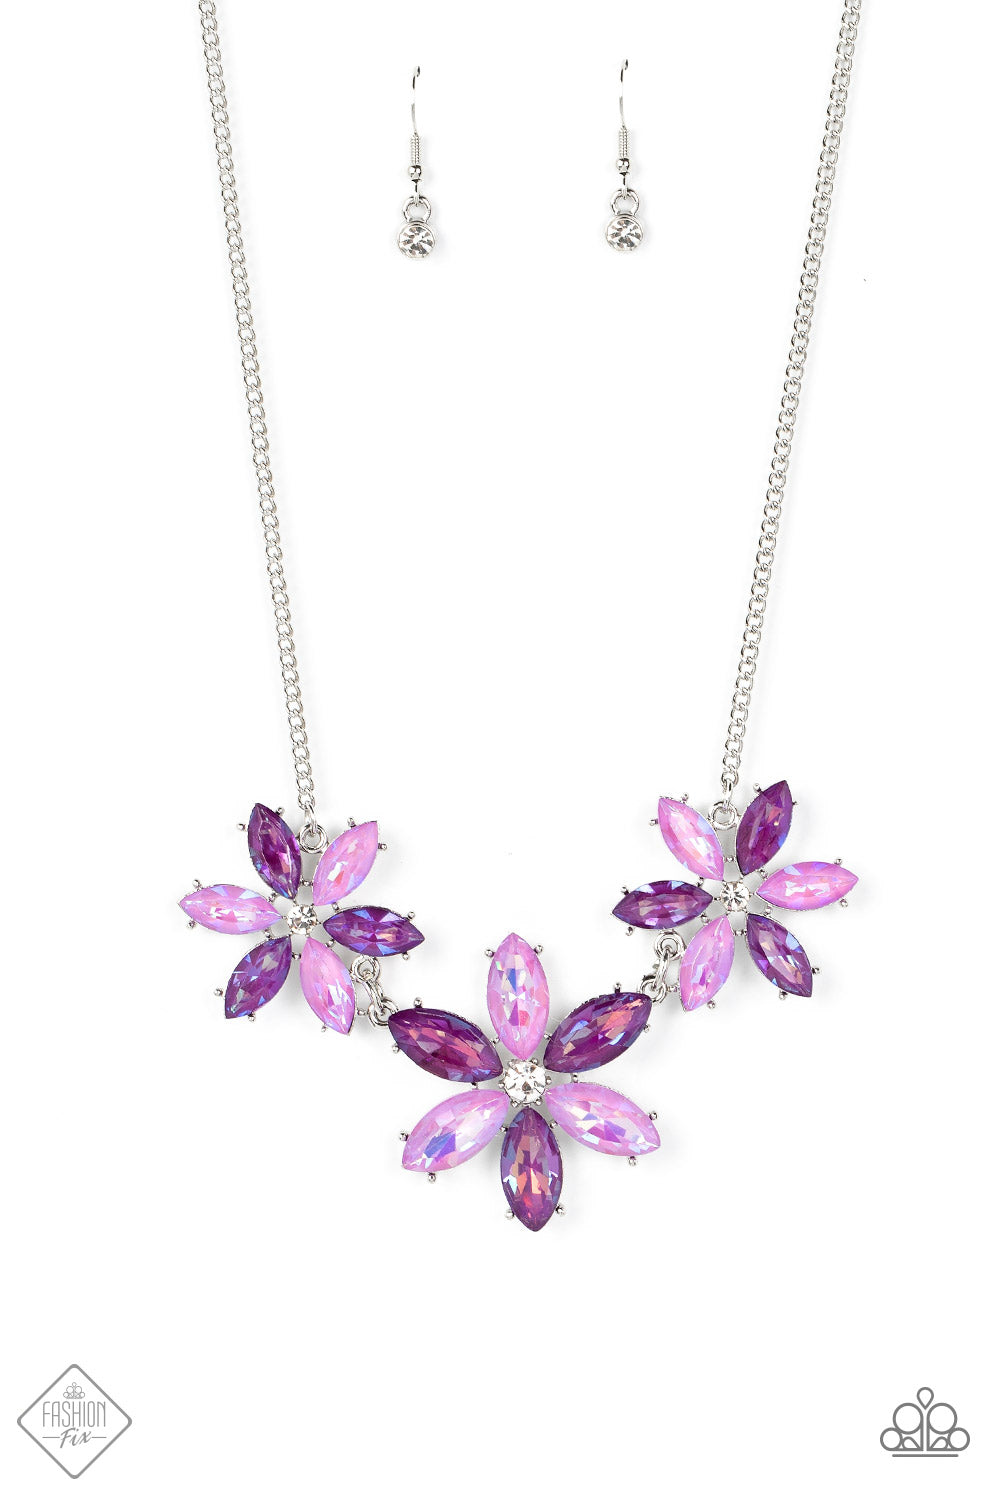 Paparazzi - Flair Affair - Purple Necklace | Fashion Fabulous Jewelry